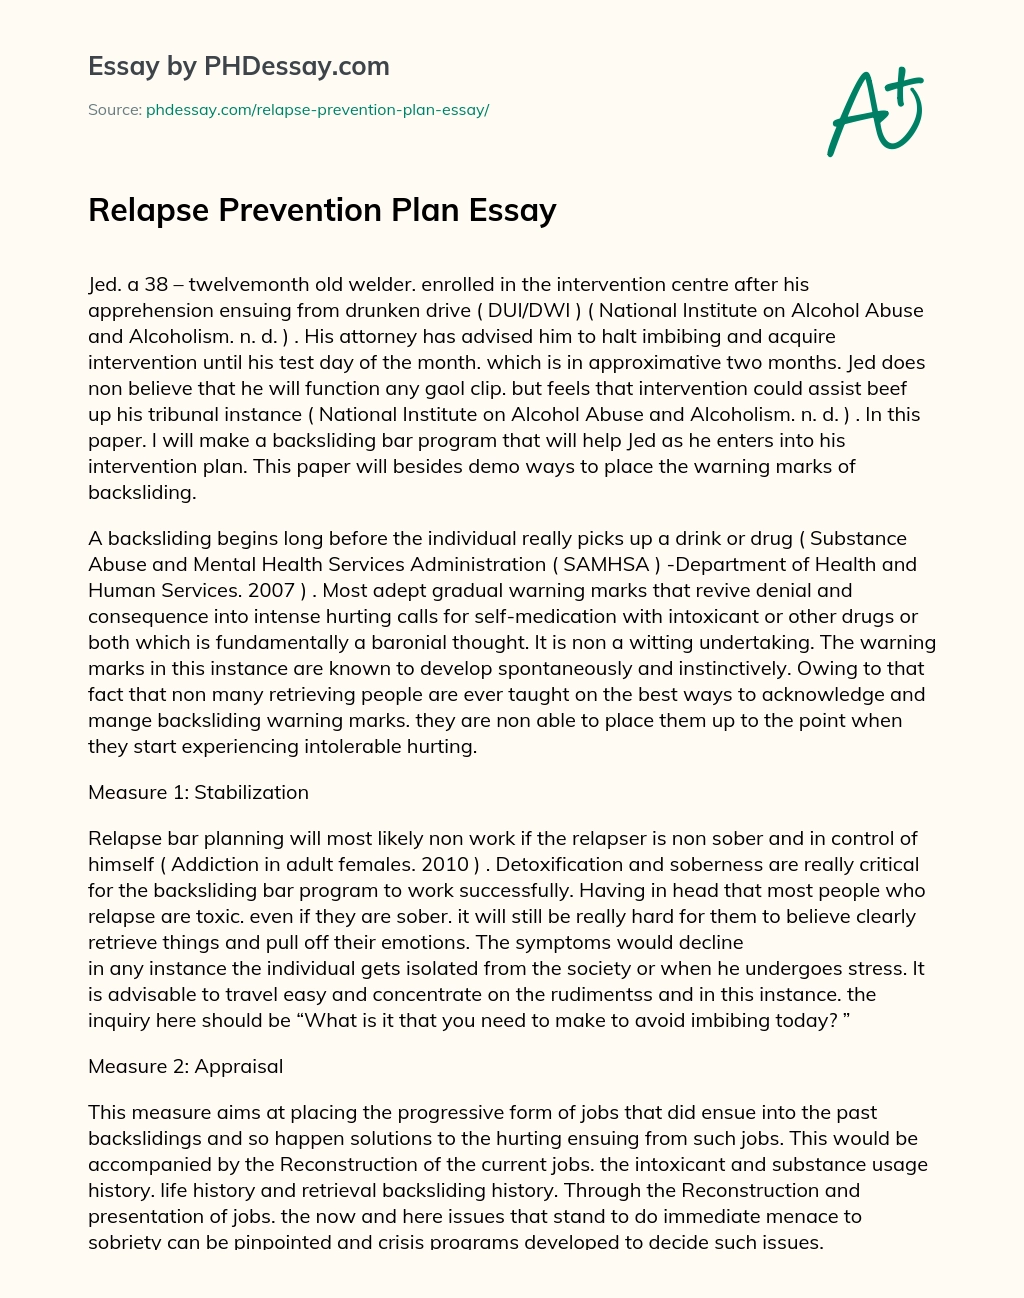 Relapse Prevention Plan Essay essay